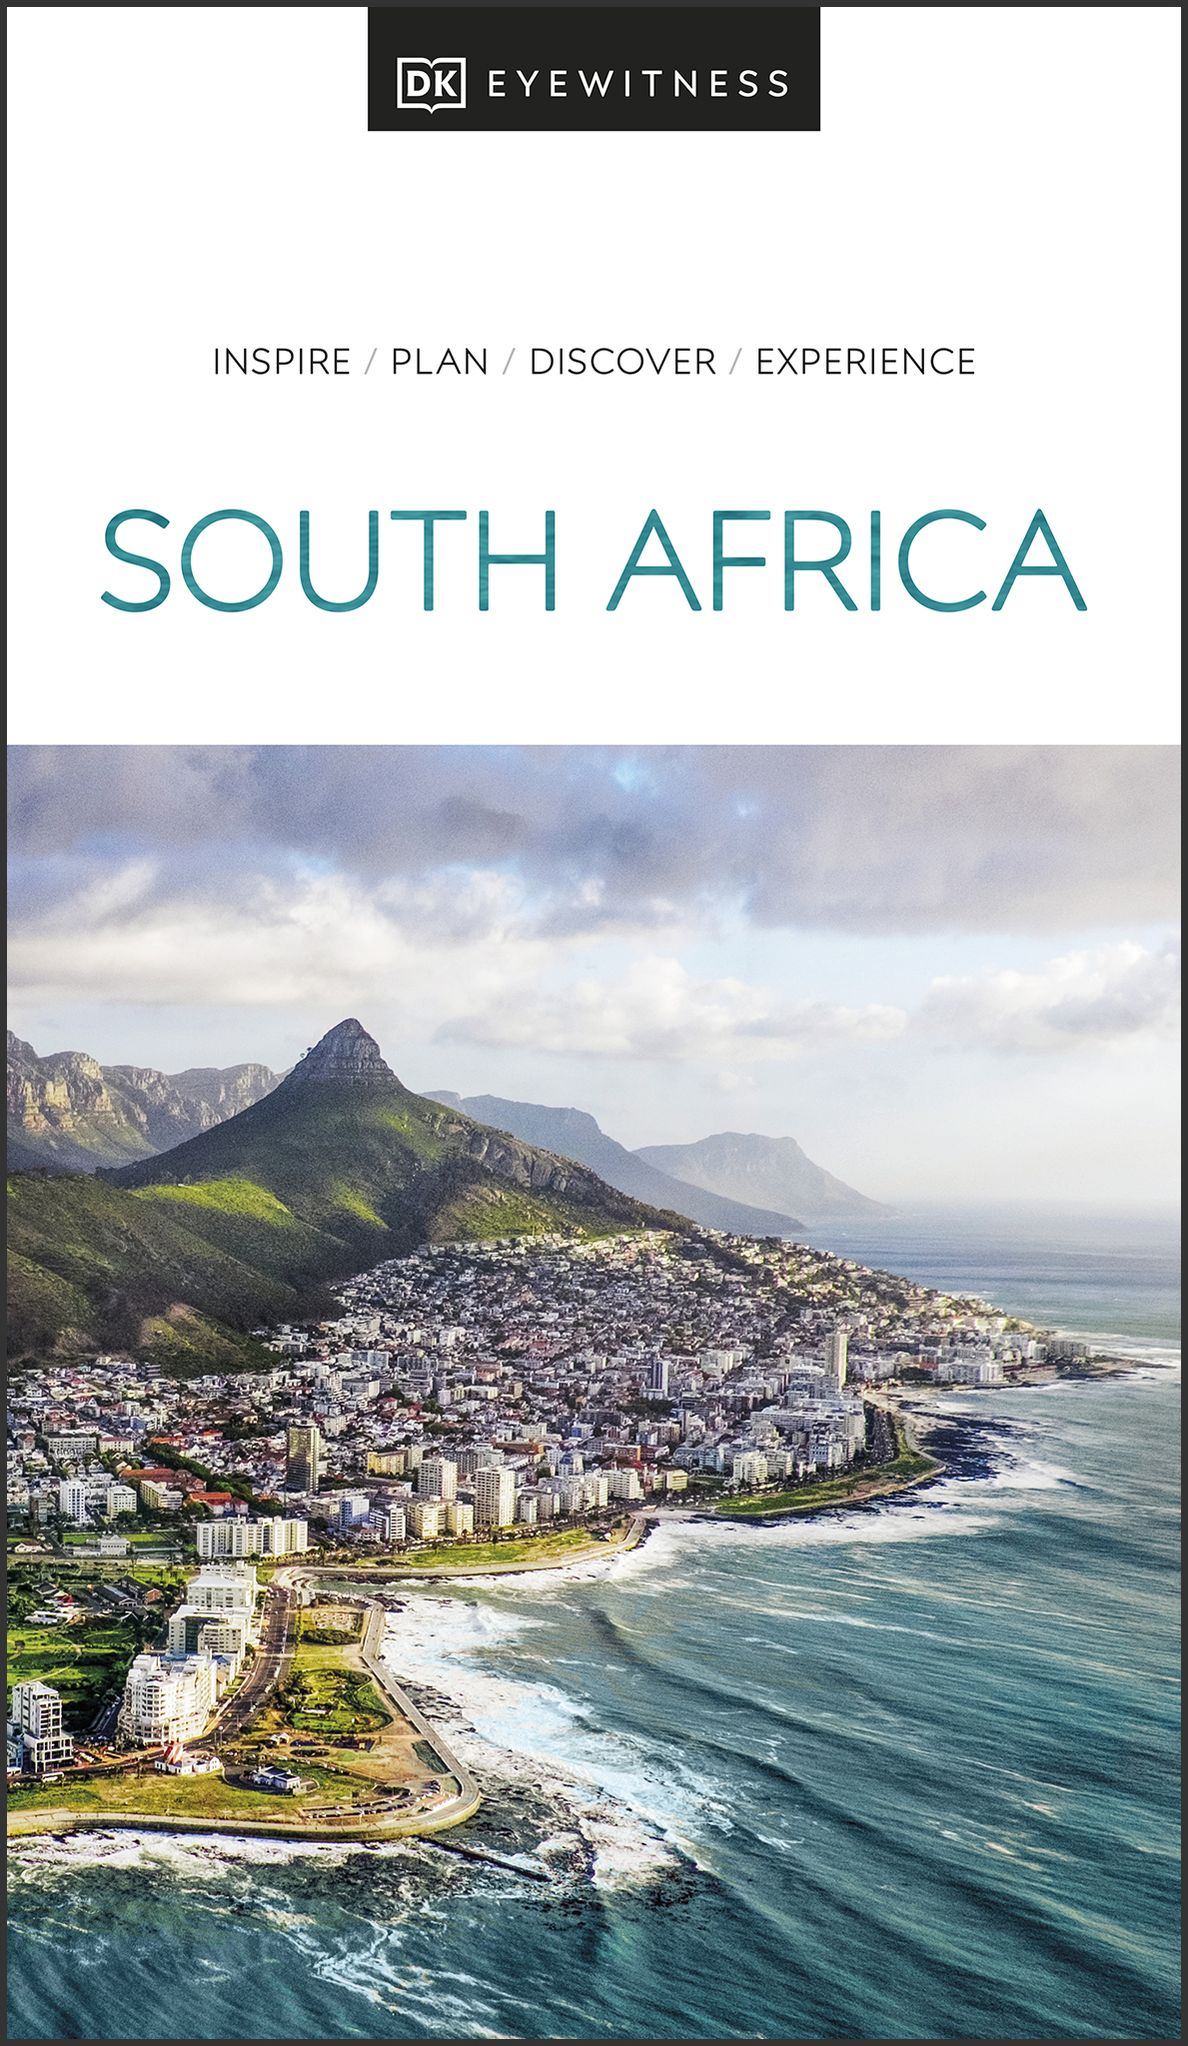 dk eyewitness travel guide south africa